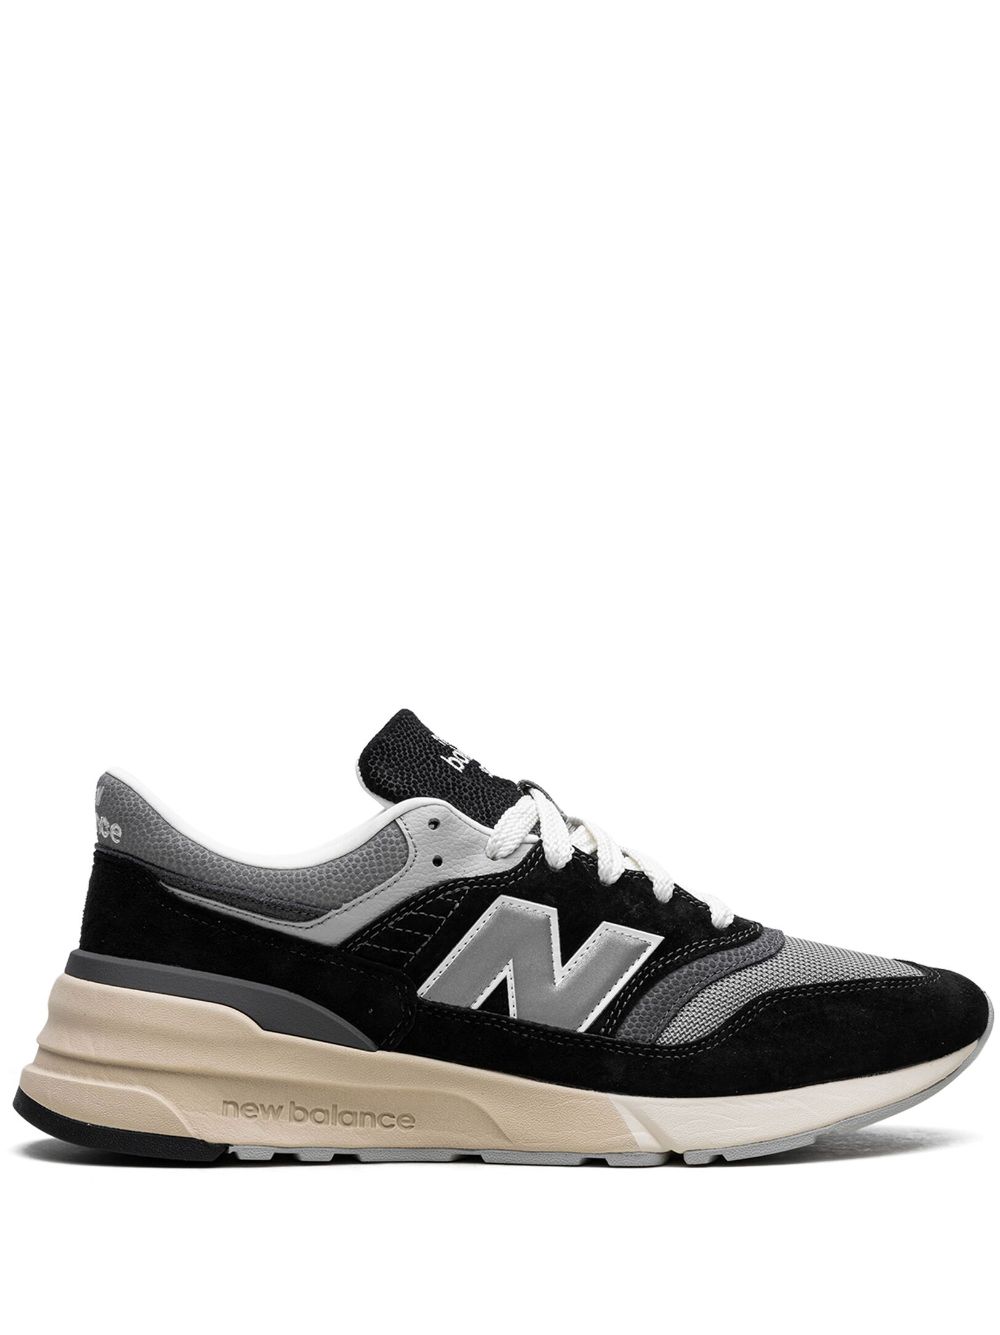 New Balance 997R "Black/Grey" sneakers von New Balance